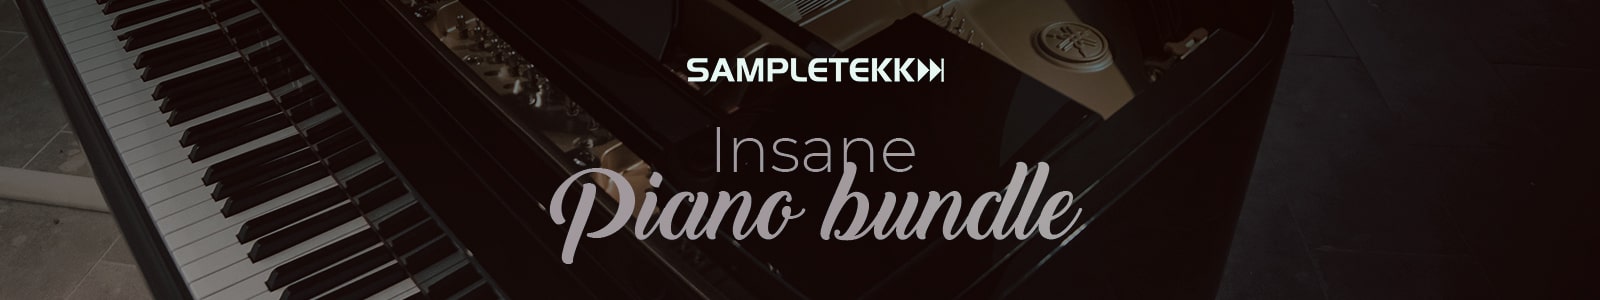 sampletekk insane piano bundle